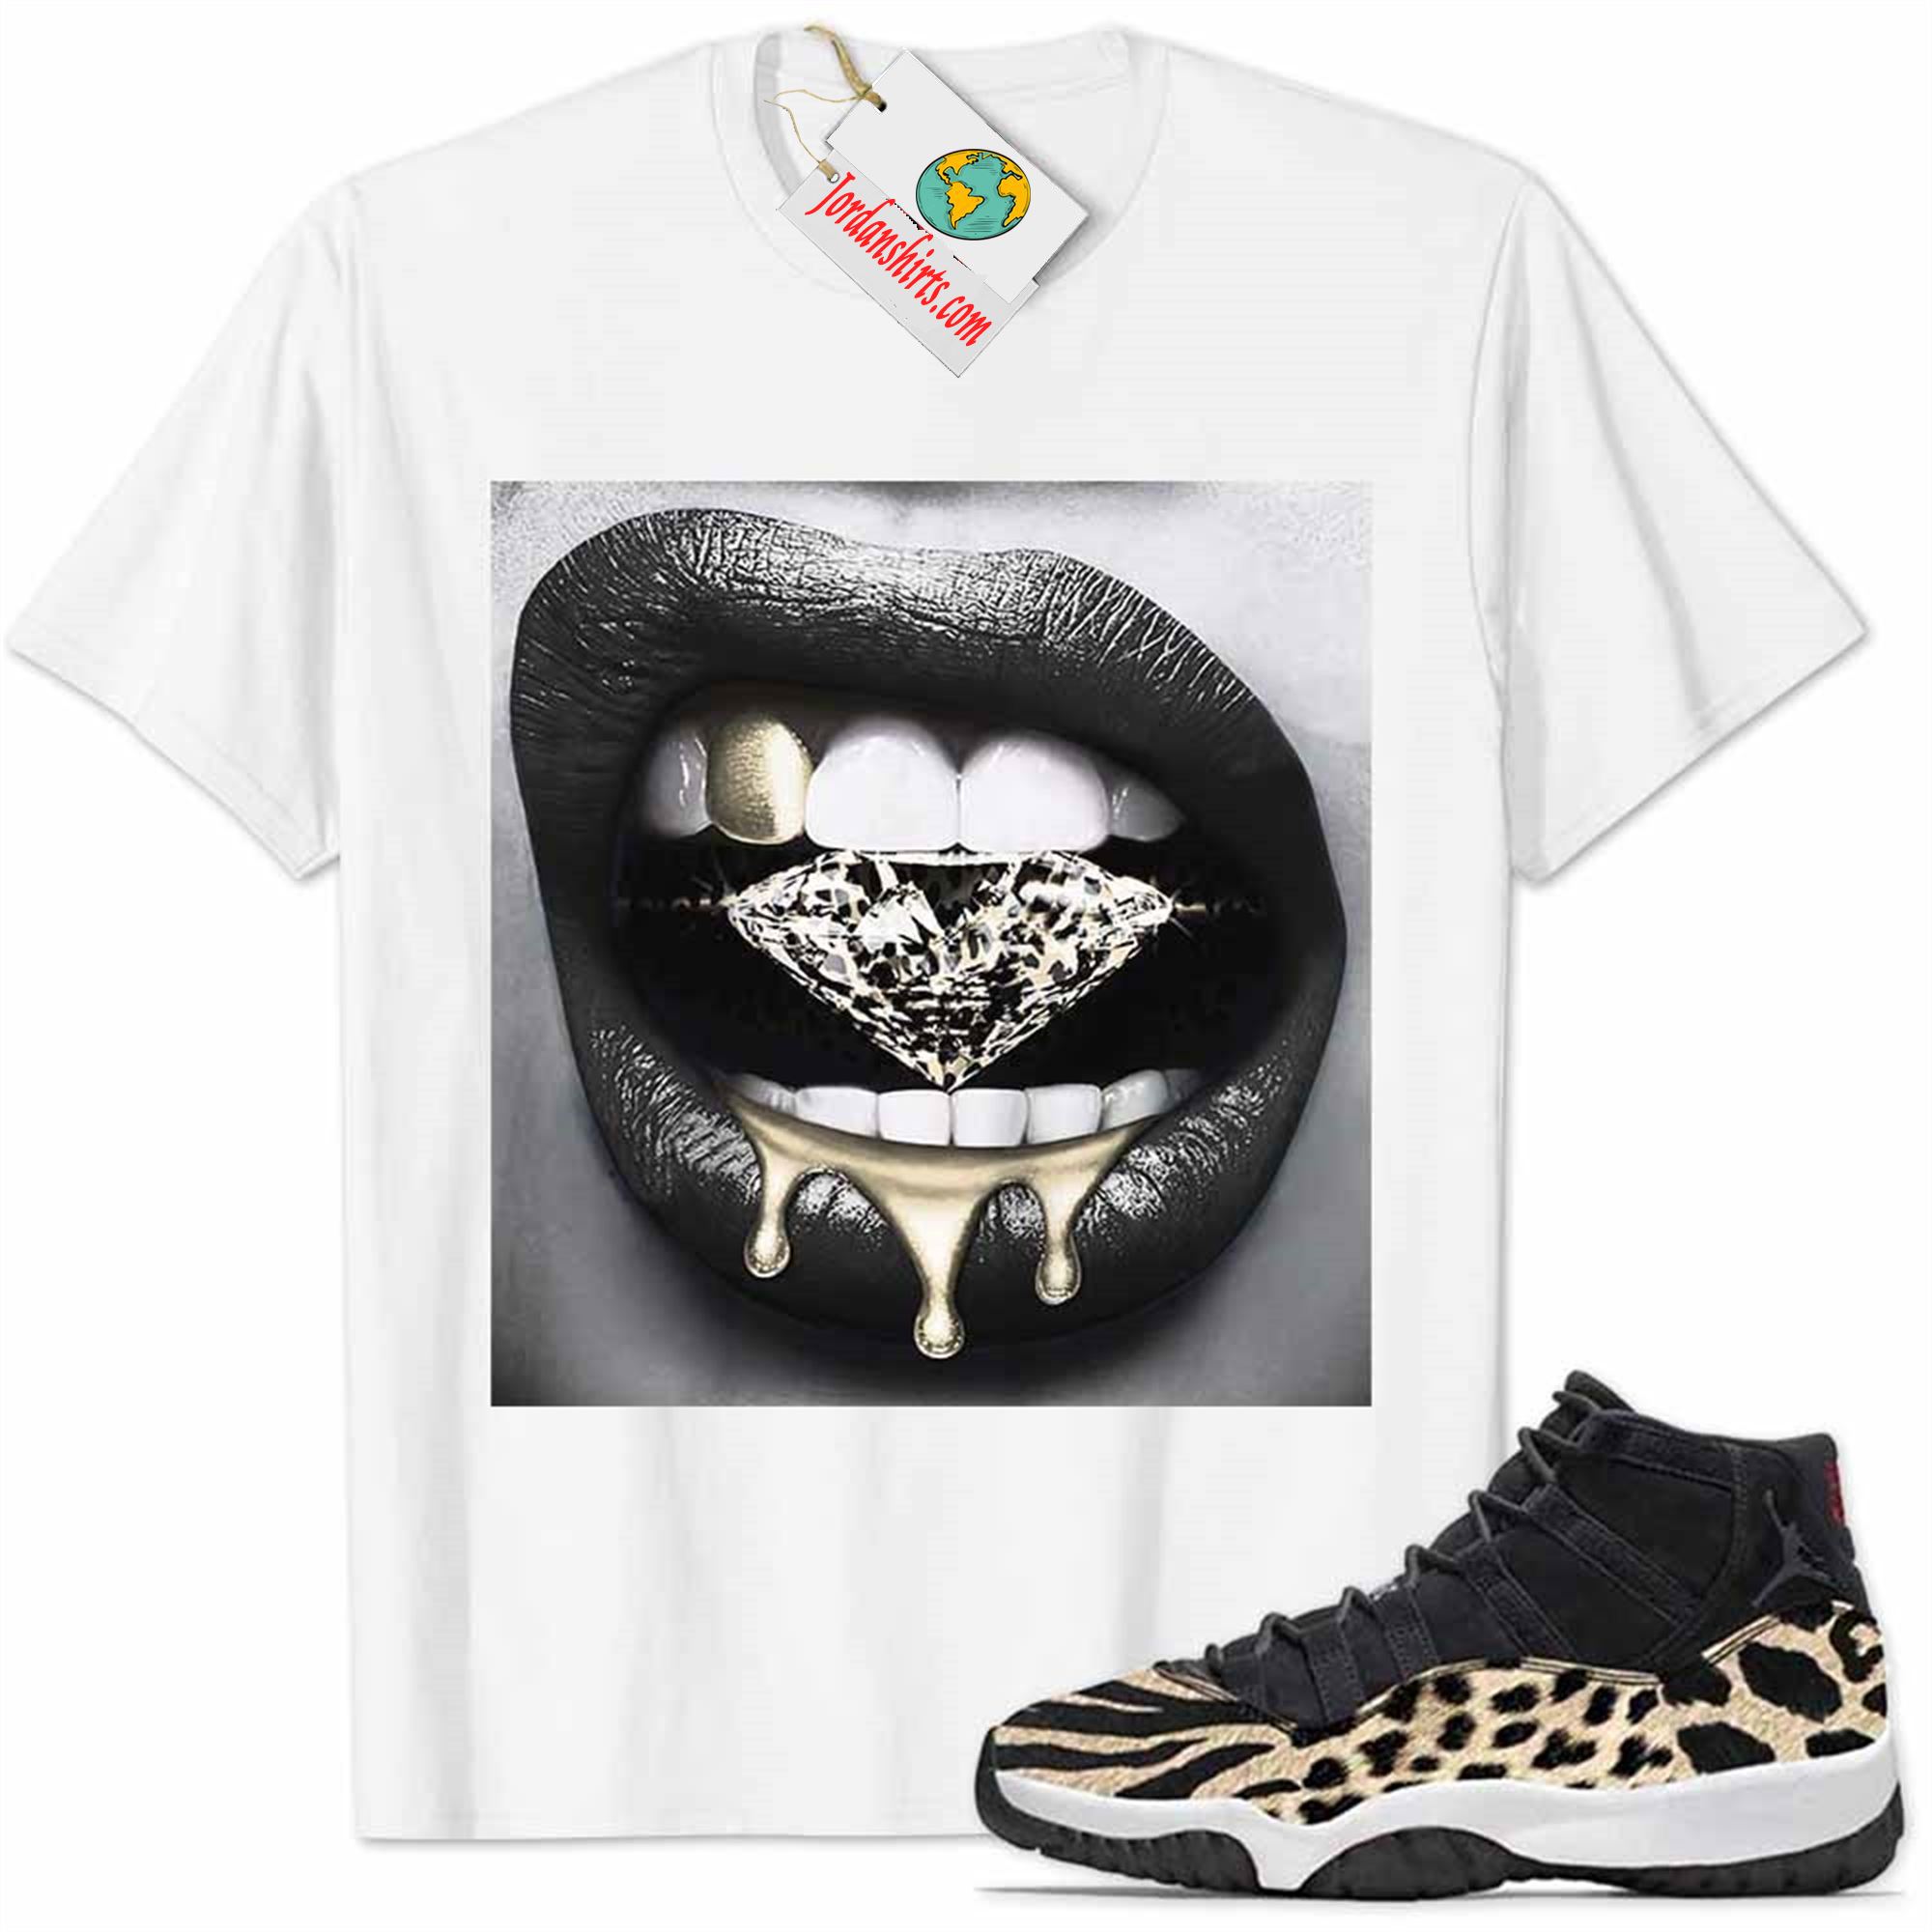 Jordan 11 Shirt, Jordan 11 Animal Print Shirt Sexy Lip Bite Diamond Dripping White Size Up To 5xl